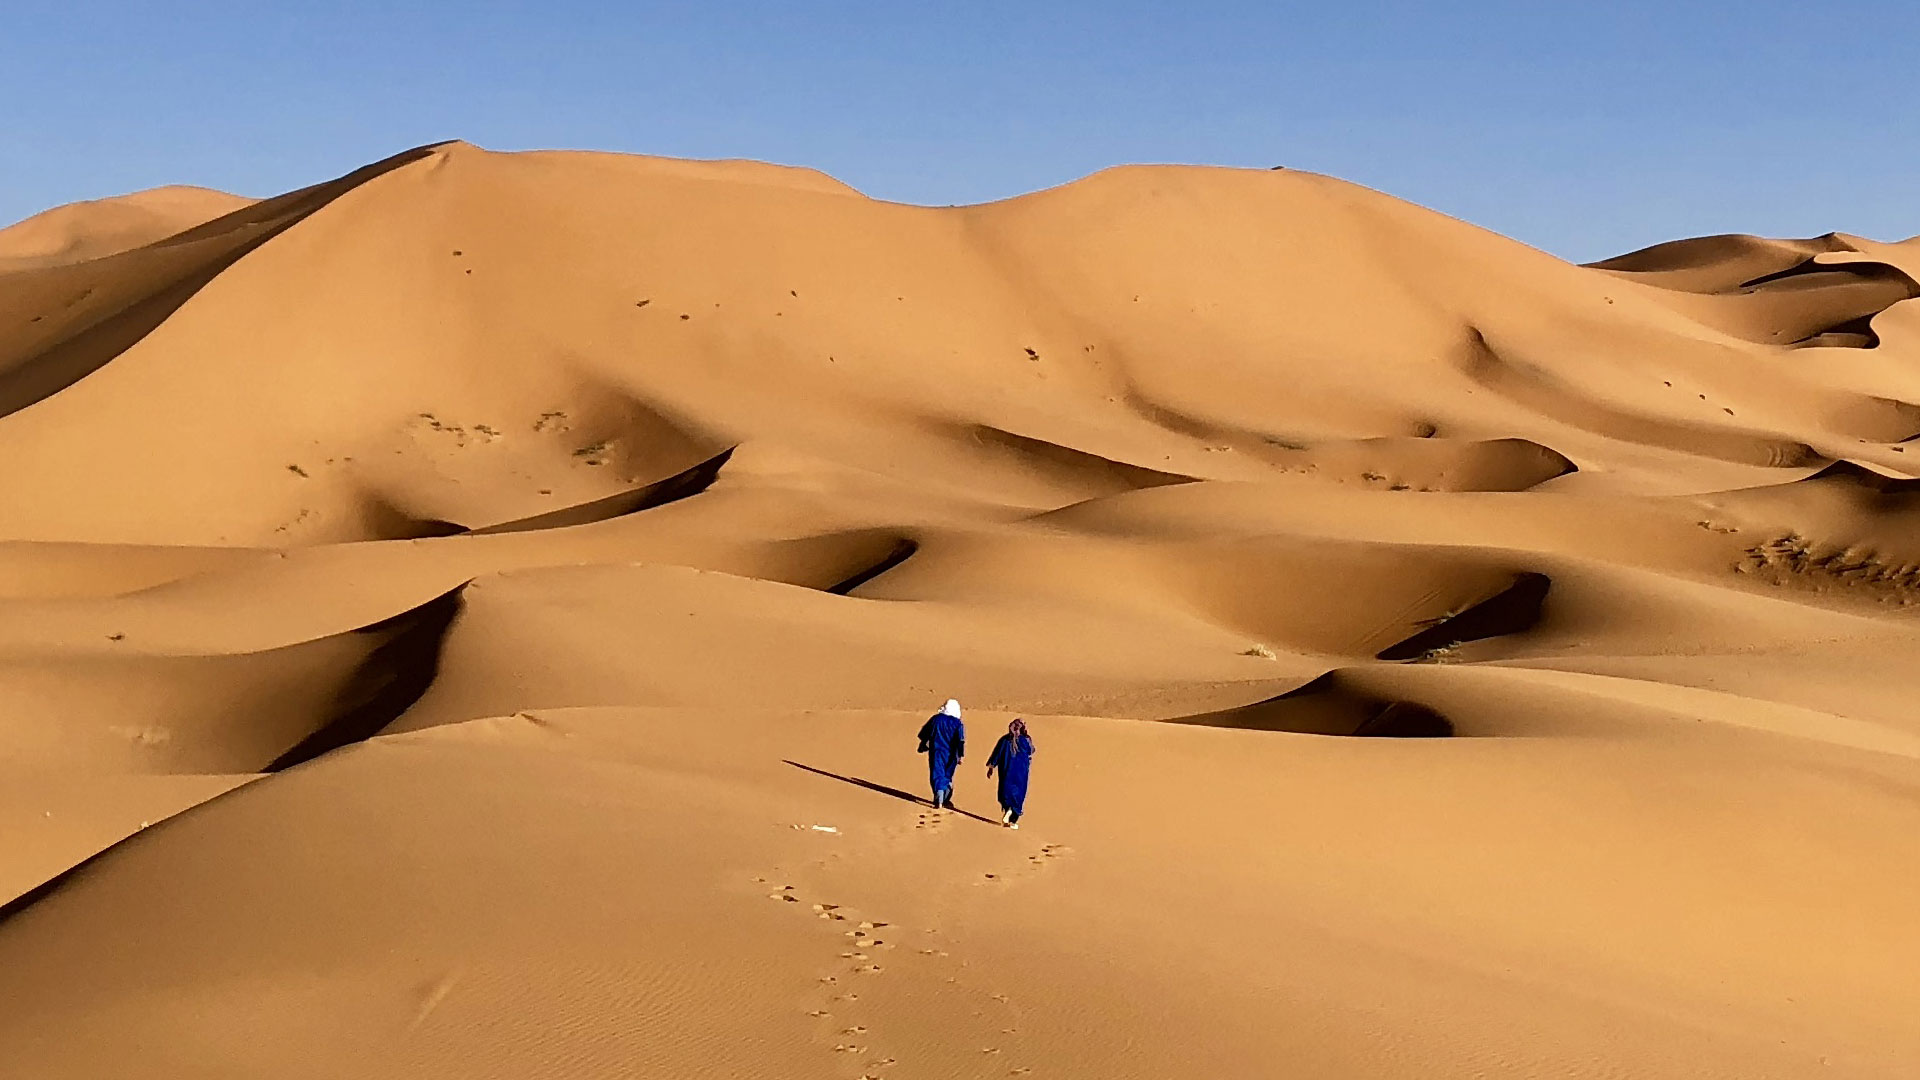 The Morocco desert.